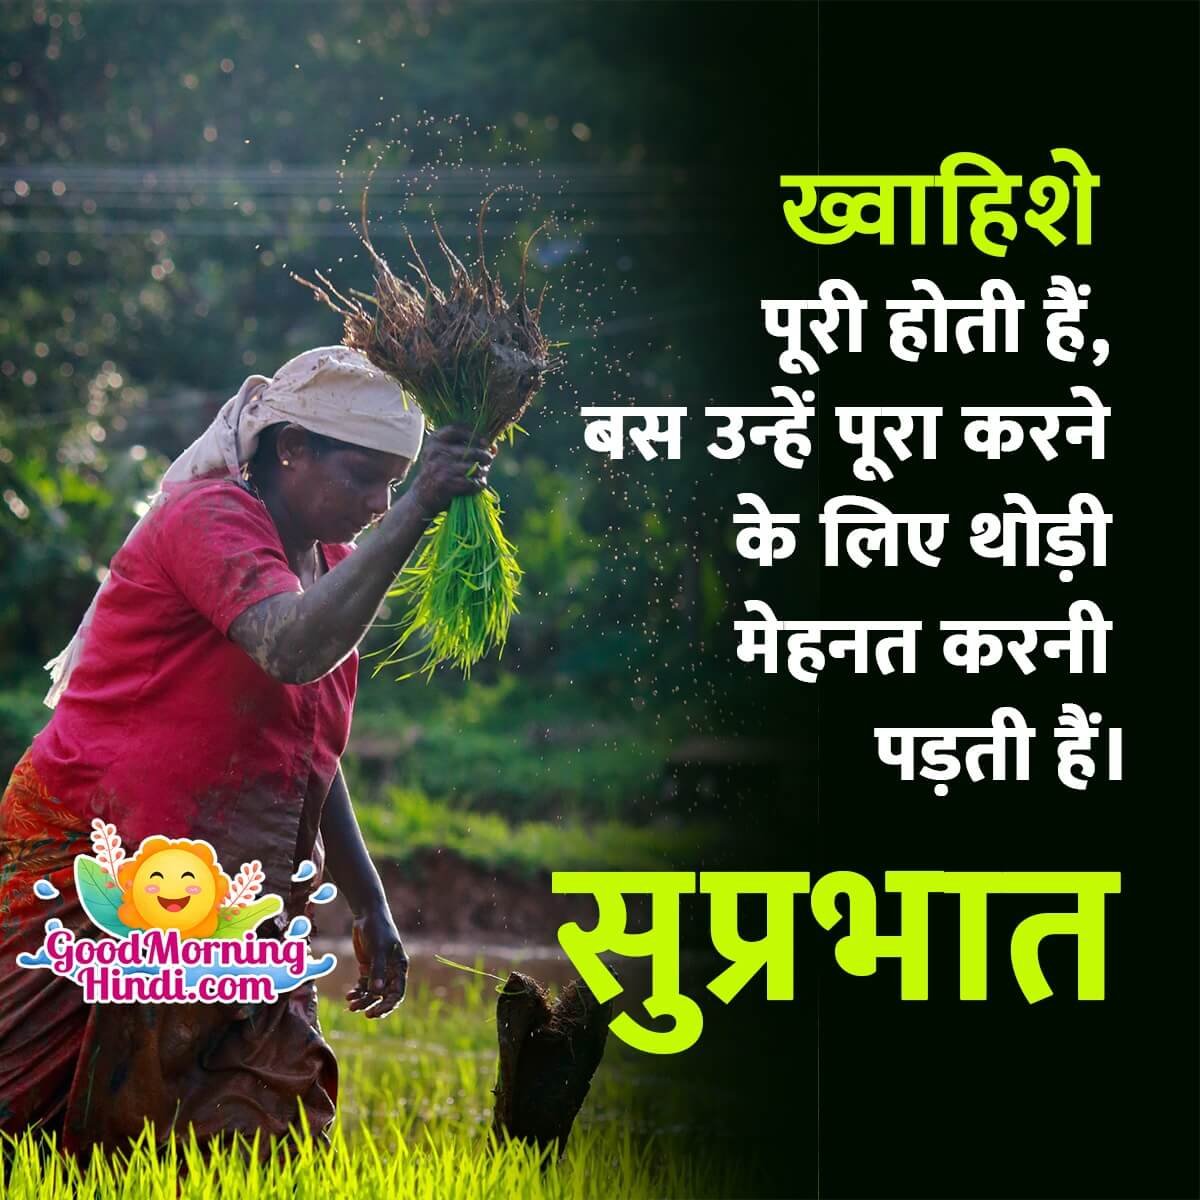 Suprabhat Hindi Message Image